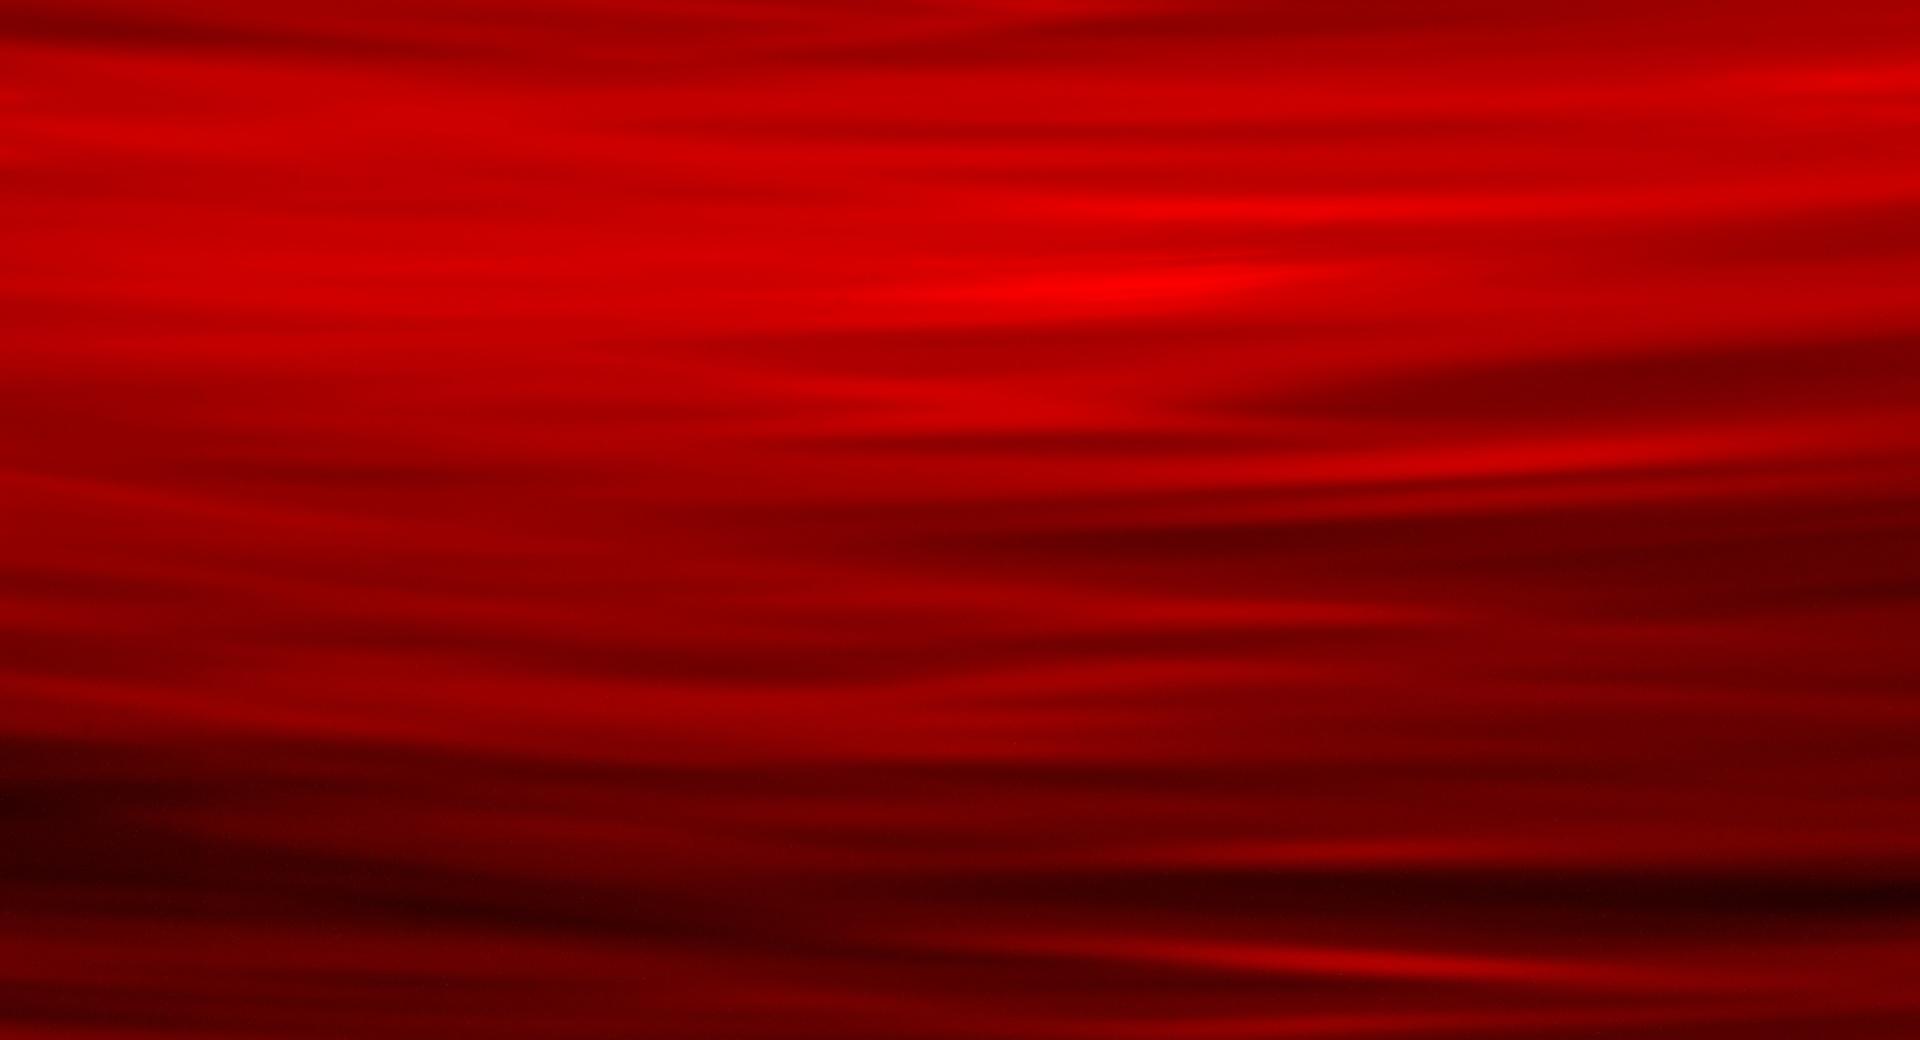 Dark Red Silk at 2048 x 2048 iPad size wallpapers HD quality